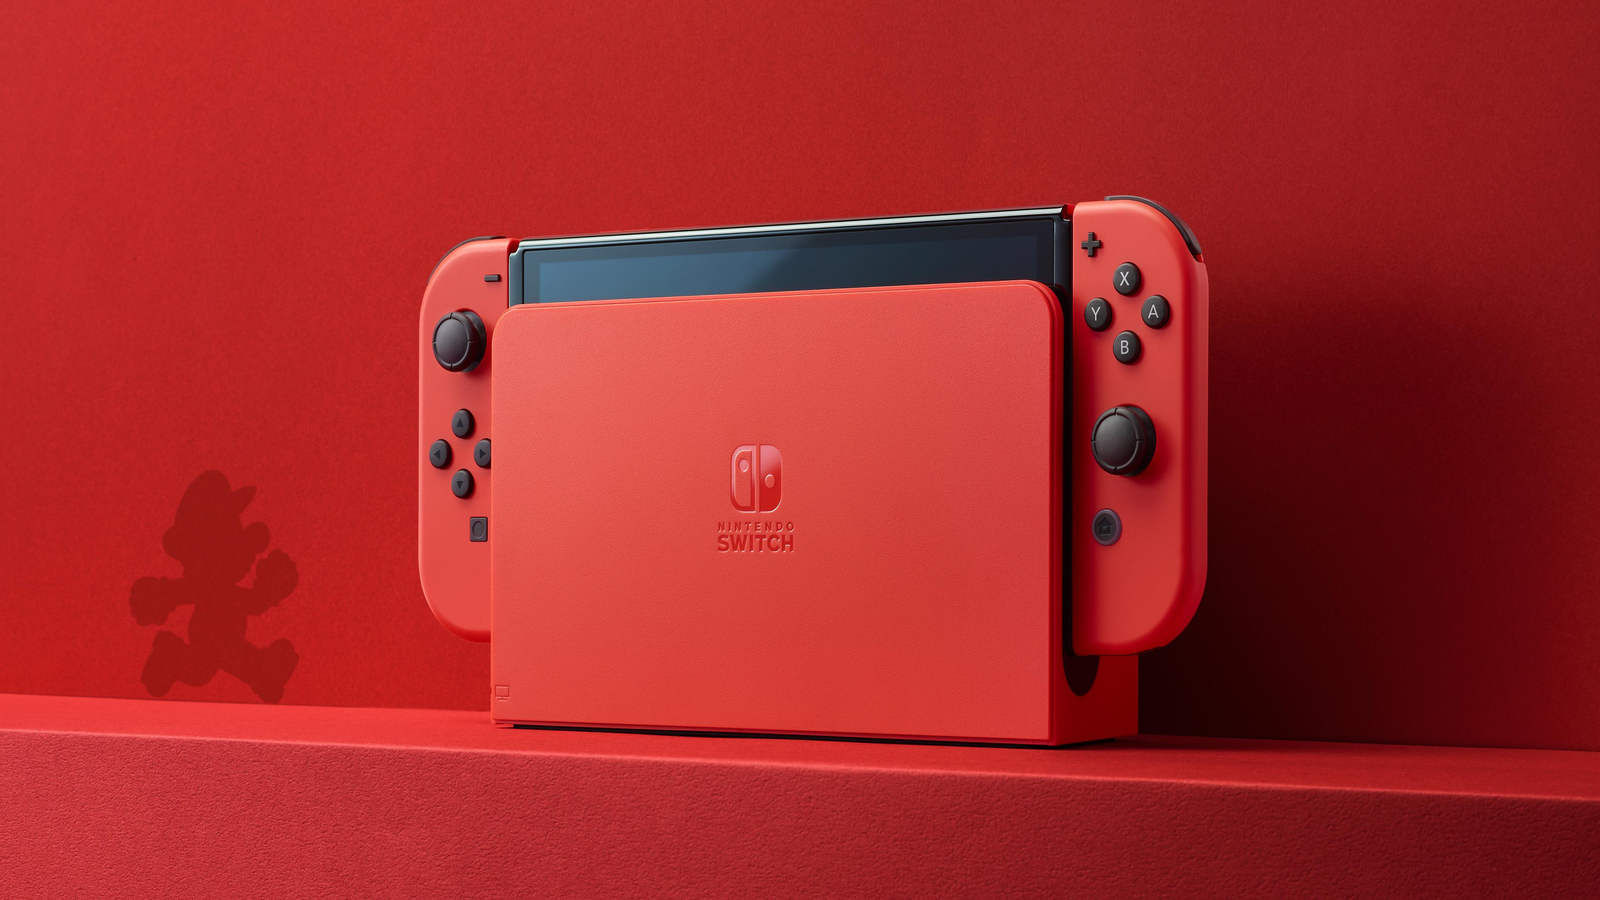 Nintendo Switch OLED Mario Red Edition Console + Super Mario Bros Wonder  NEW